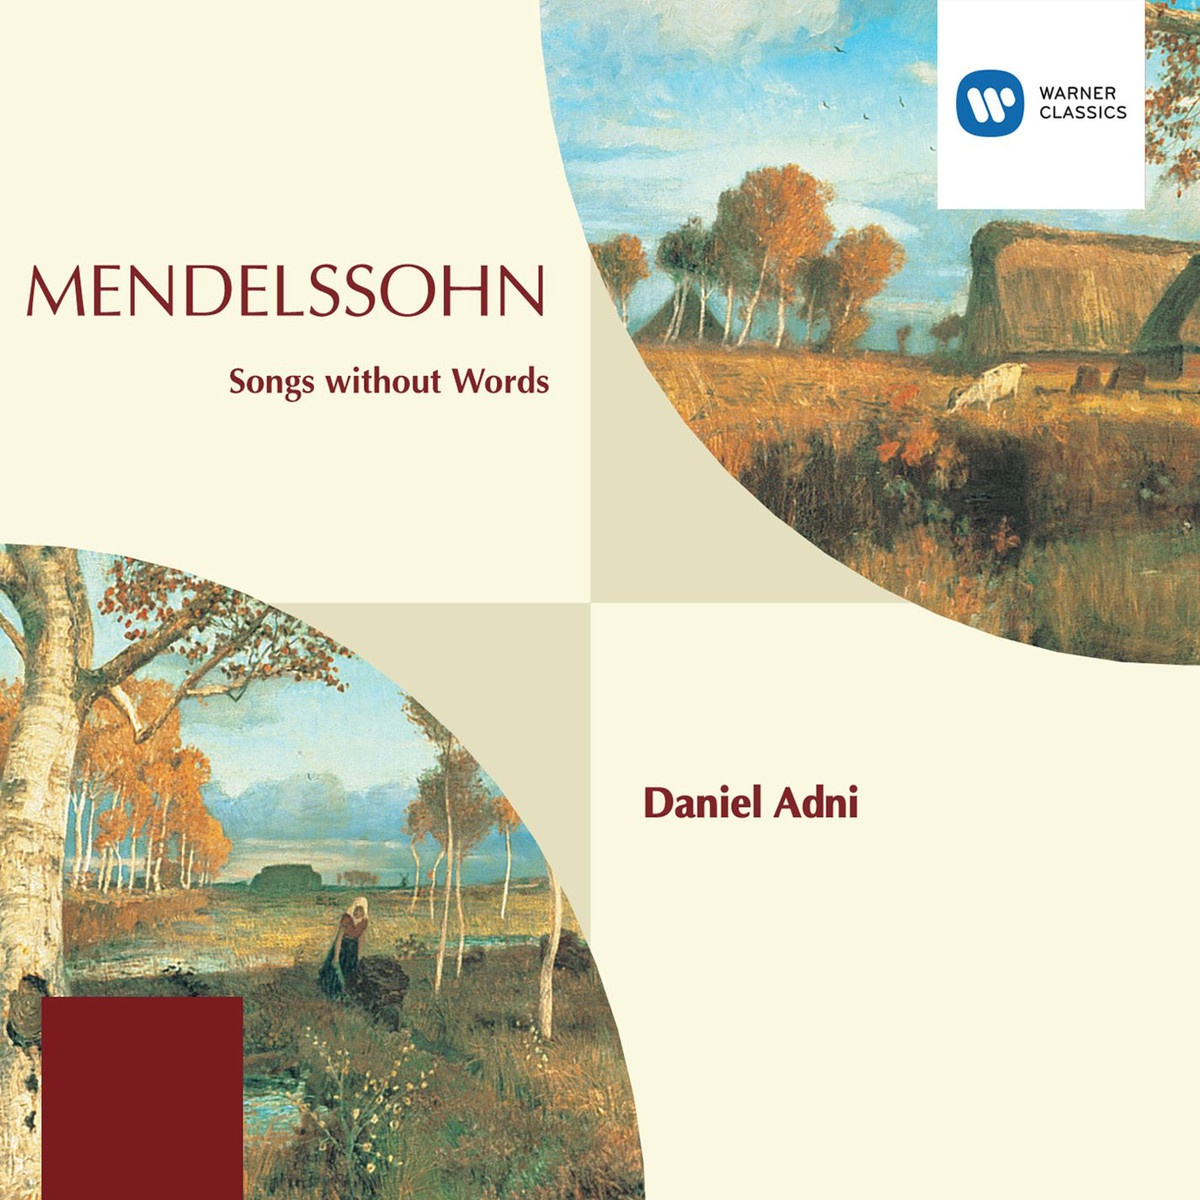 Songs without Words (1996 Digital Remaster): Andante espressivo in F major, Op. 85 No. 1